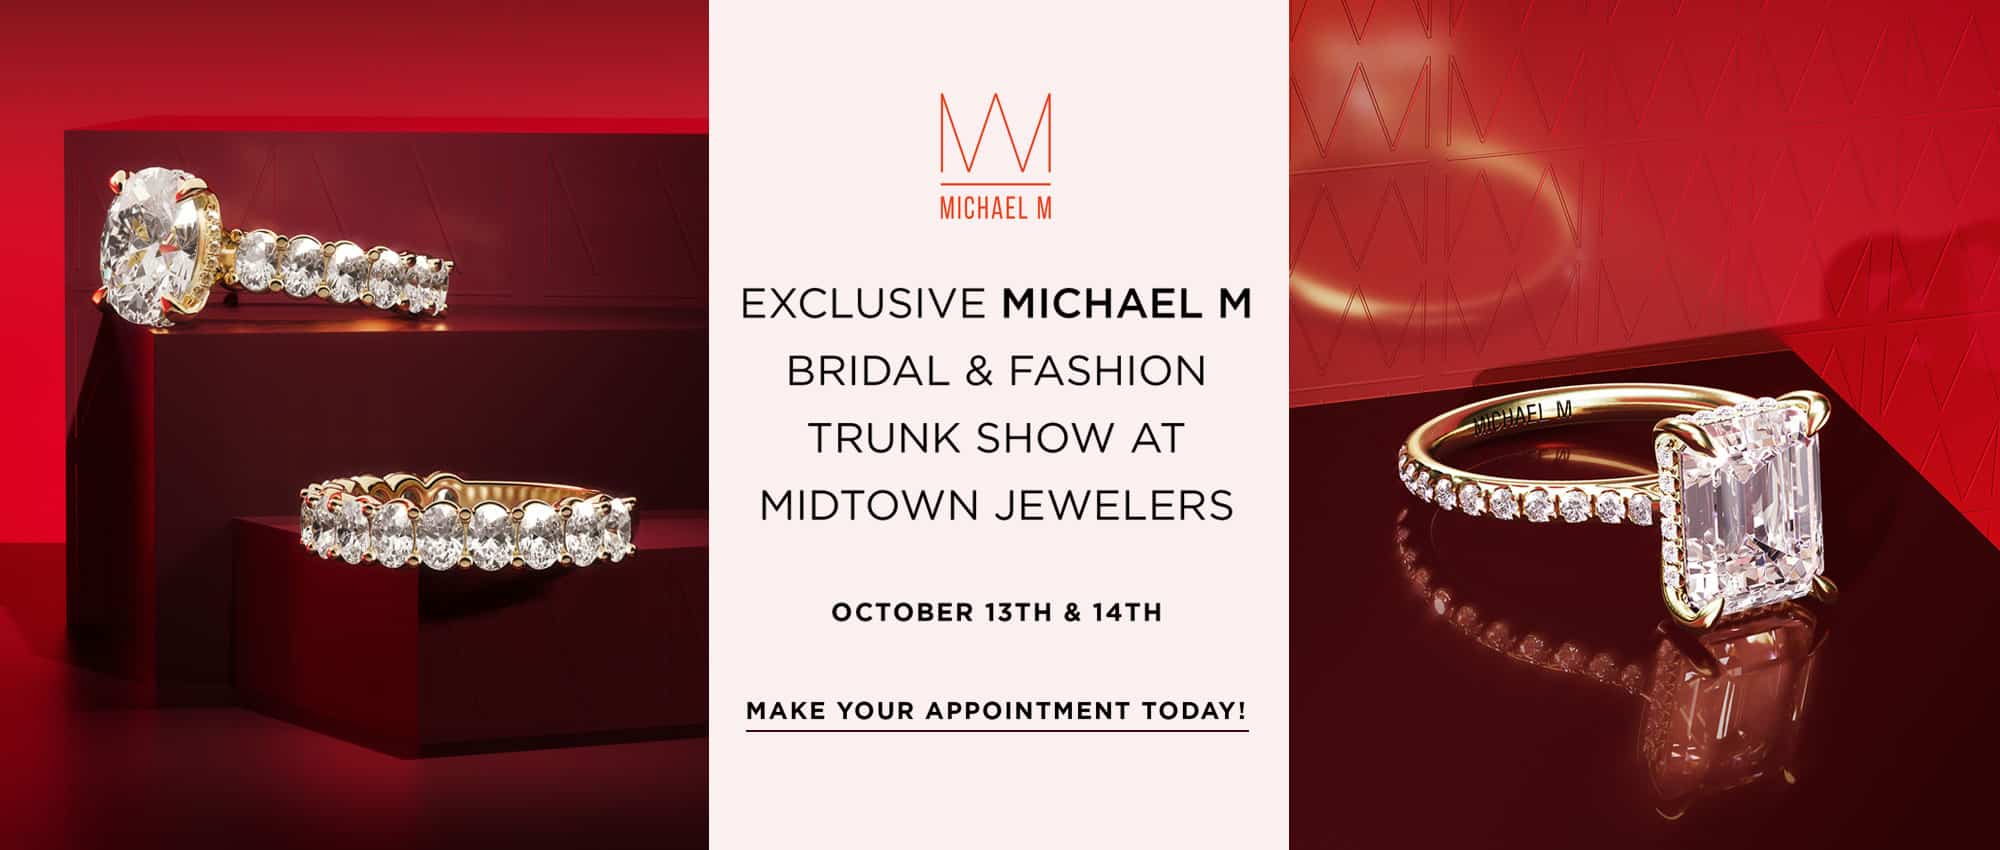 Trunk Show At Midtown Jewelers At Midtown Jewelers